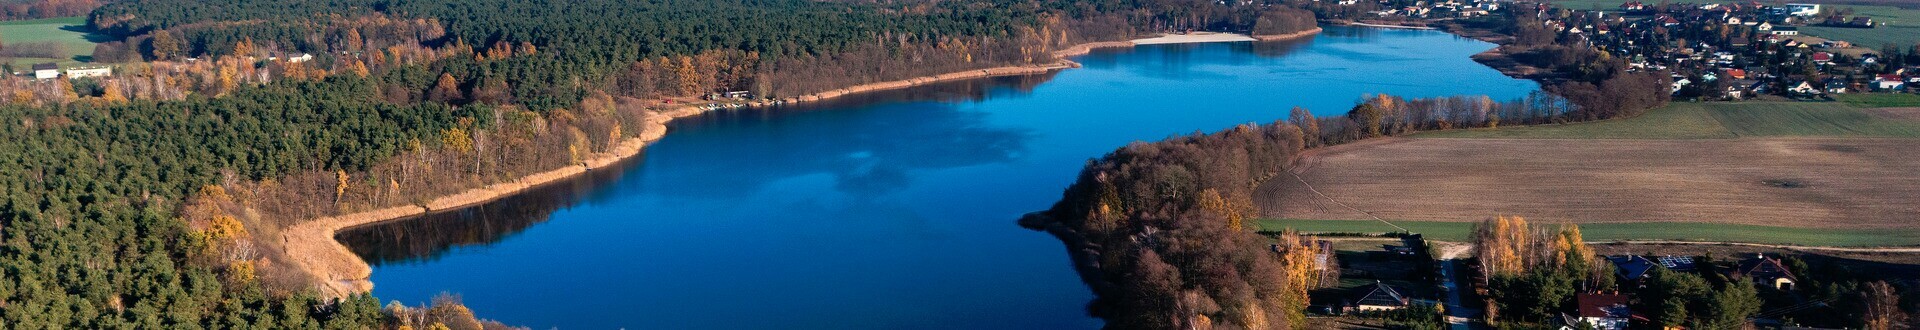 Baner top Gminy Dobrcz. Widok na jezioro Bor&oacute;wno. 